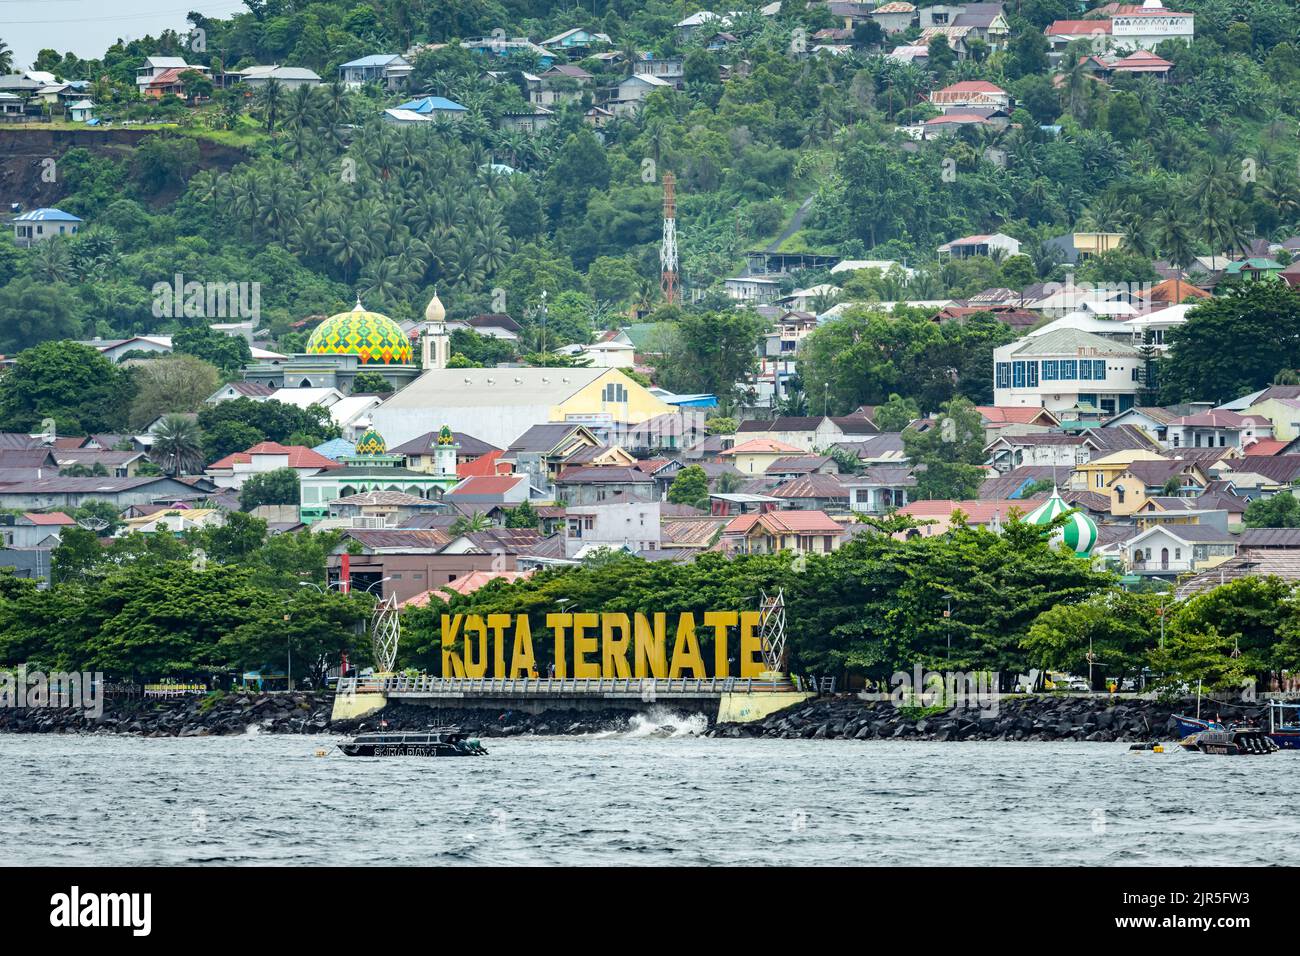 Gran signo de Kota Ternate al pie de la ciudad. Isla Ternate, Maluku del Norte, Indonesia. Foto de stock